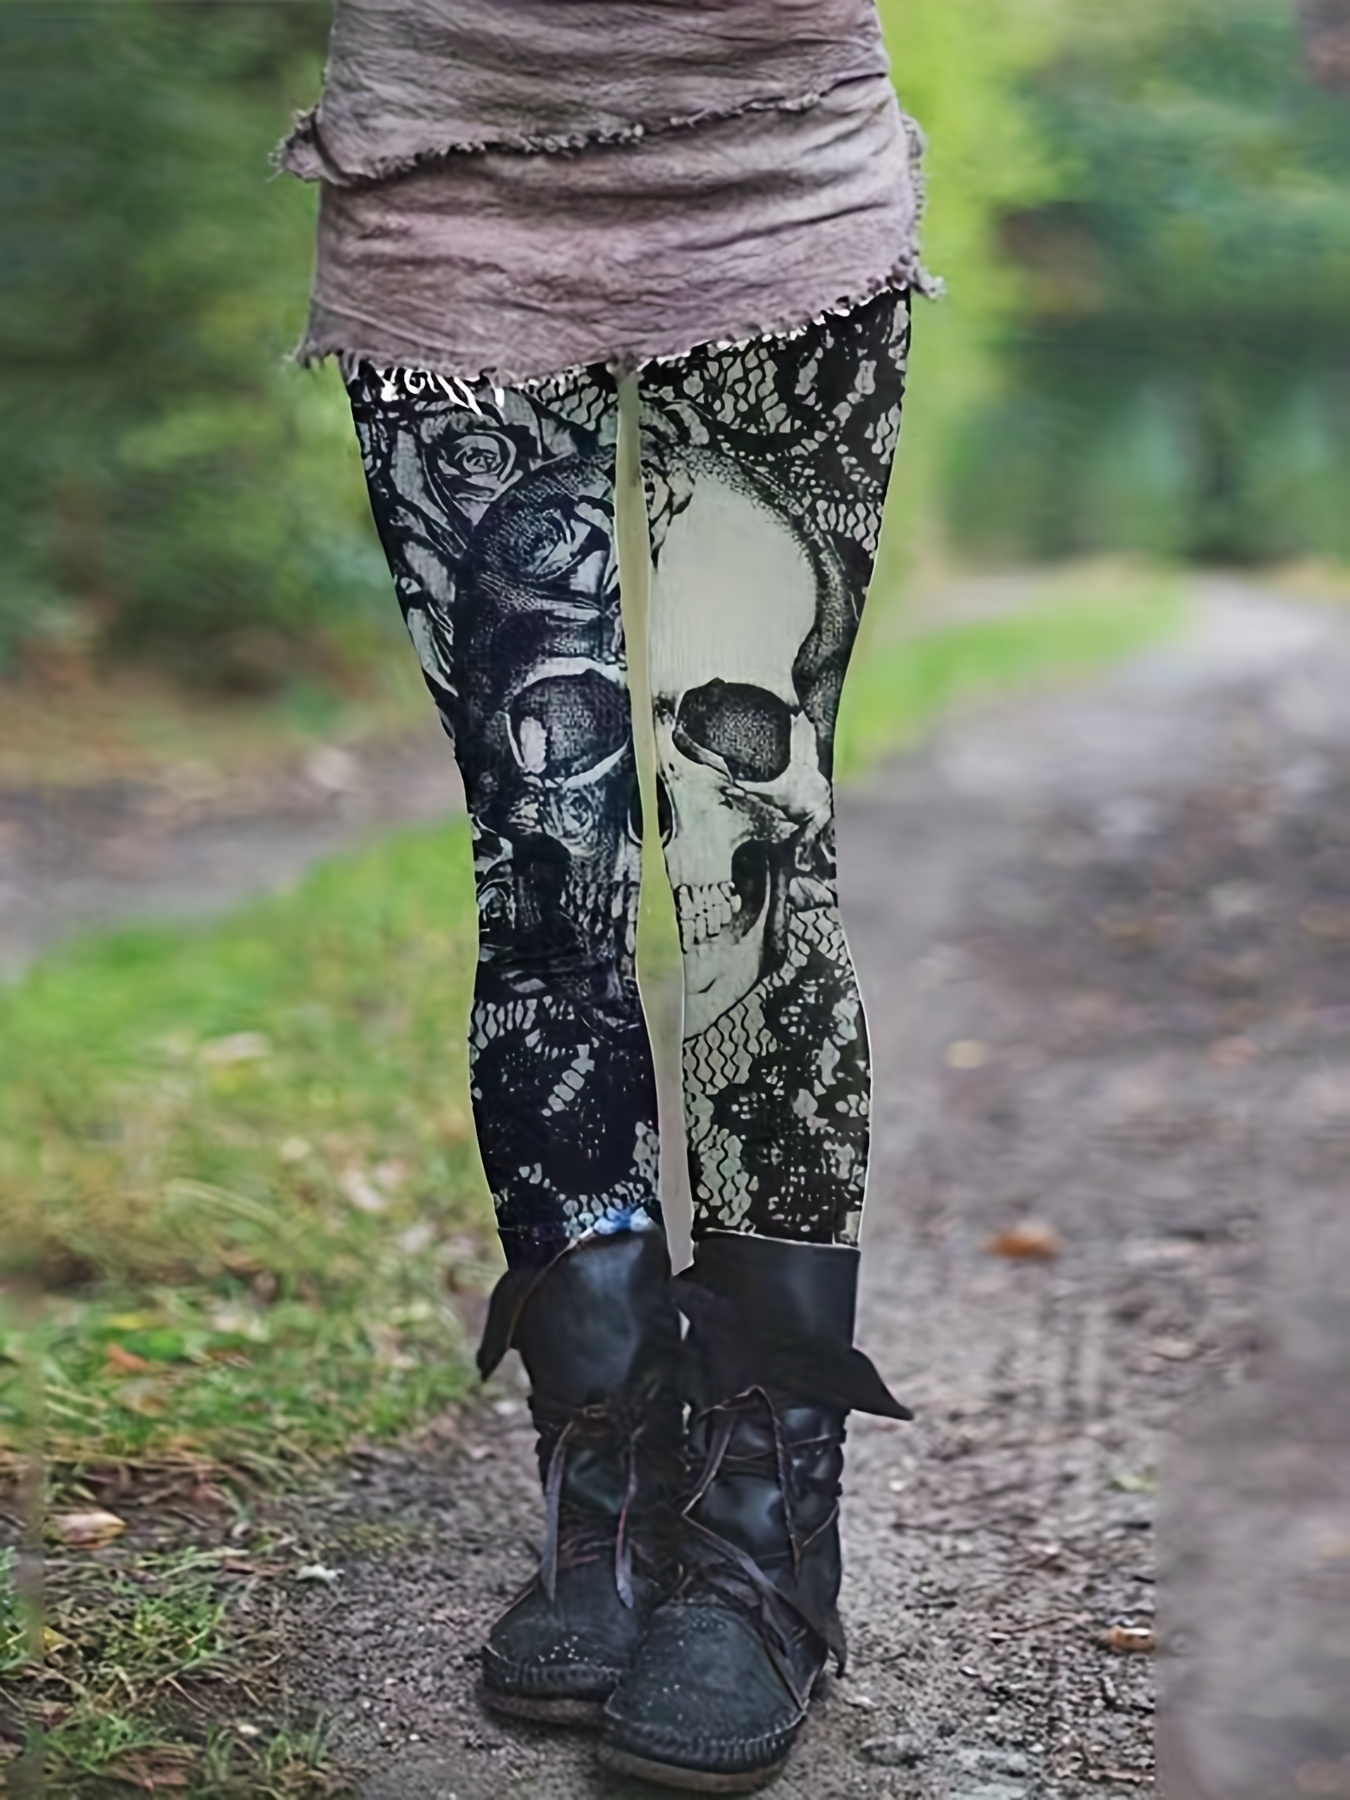 Skull Print Slim Leggings, Casual High Waist Hole Elastic Tight Fashion  Leggings, Women's Clothing